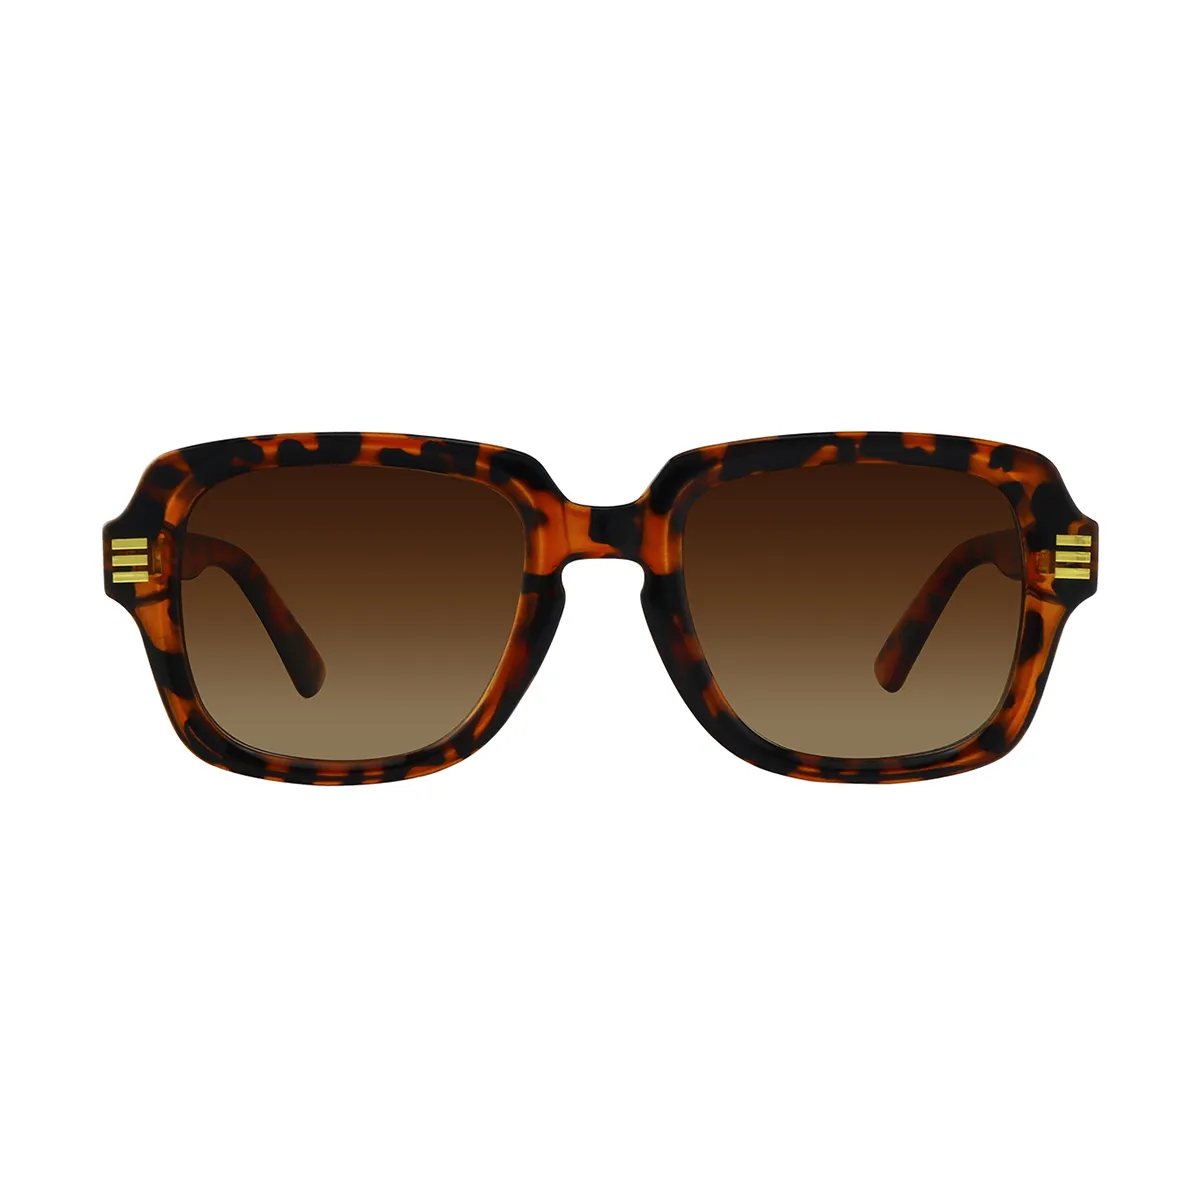 Foena - Square Tortoisehell Sunglasses for Women